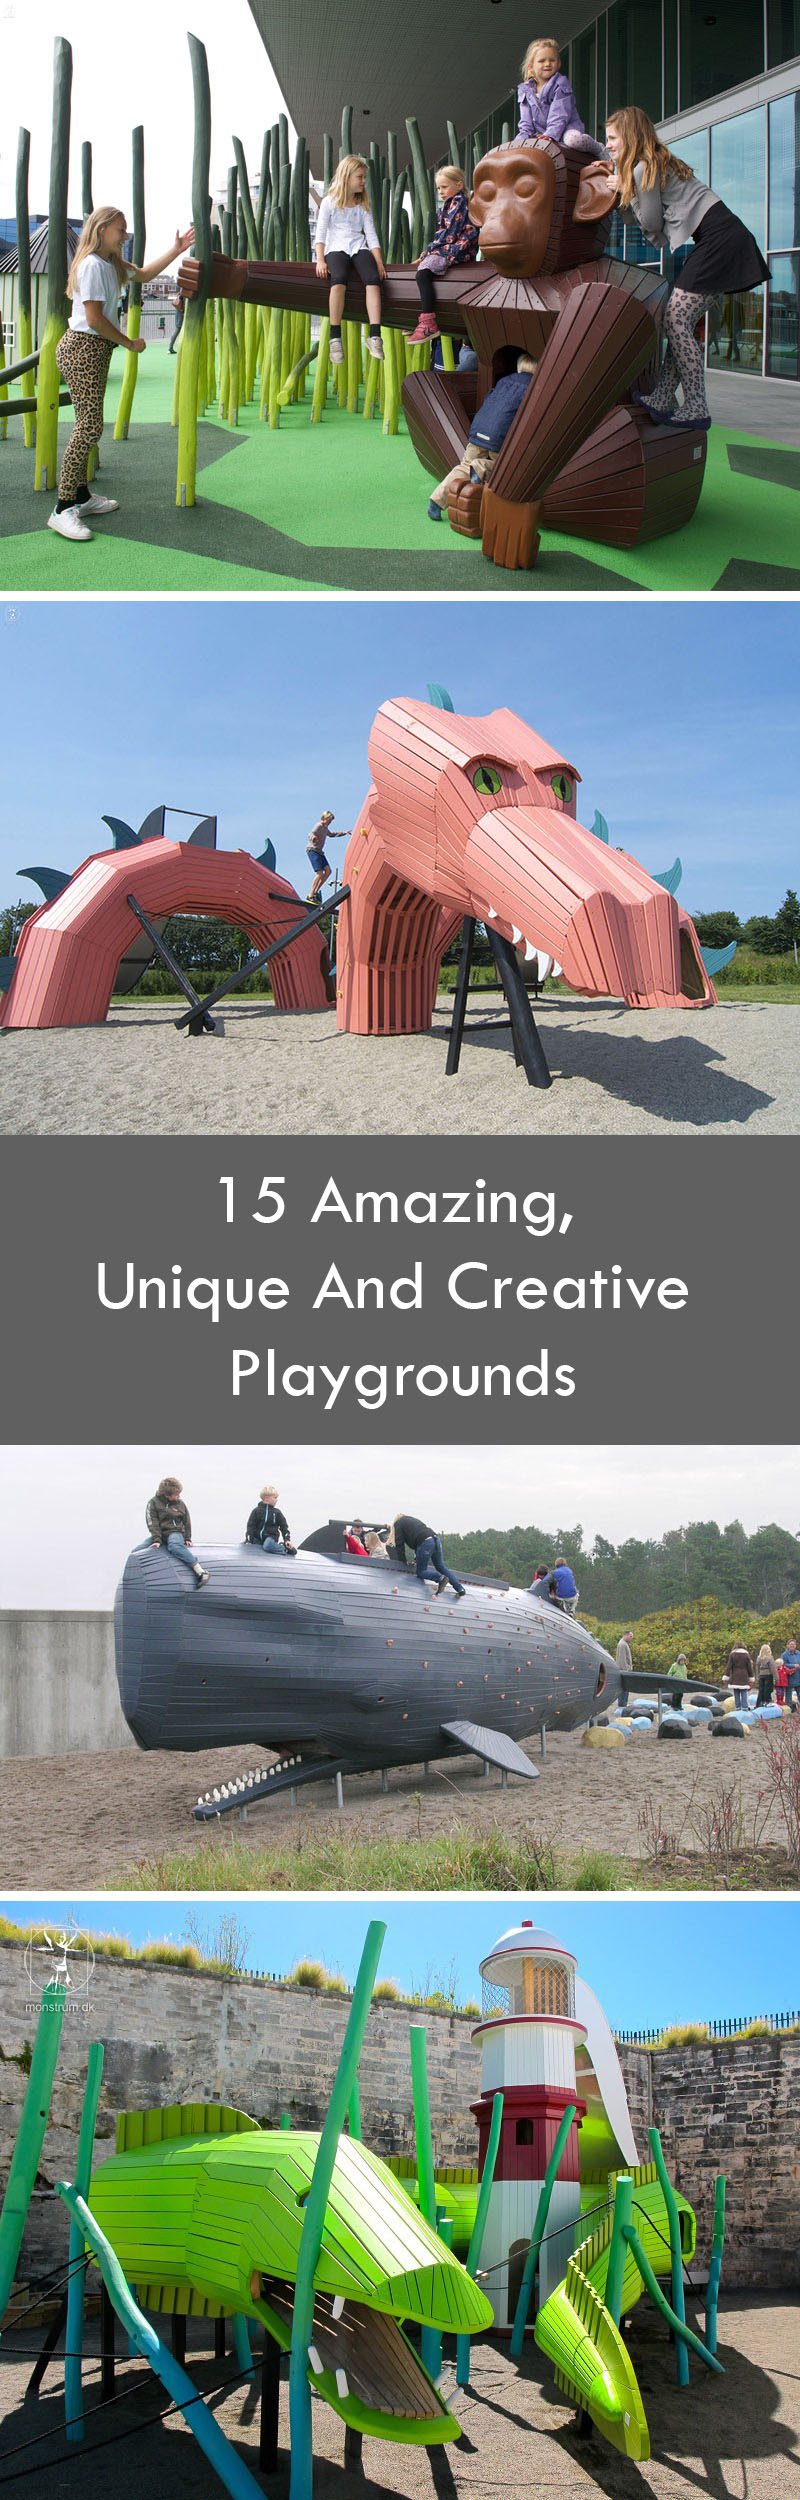 15 Amazing, Unique And Creative Playgrounds